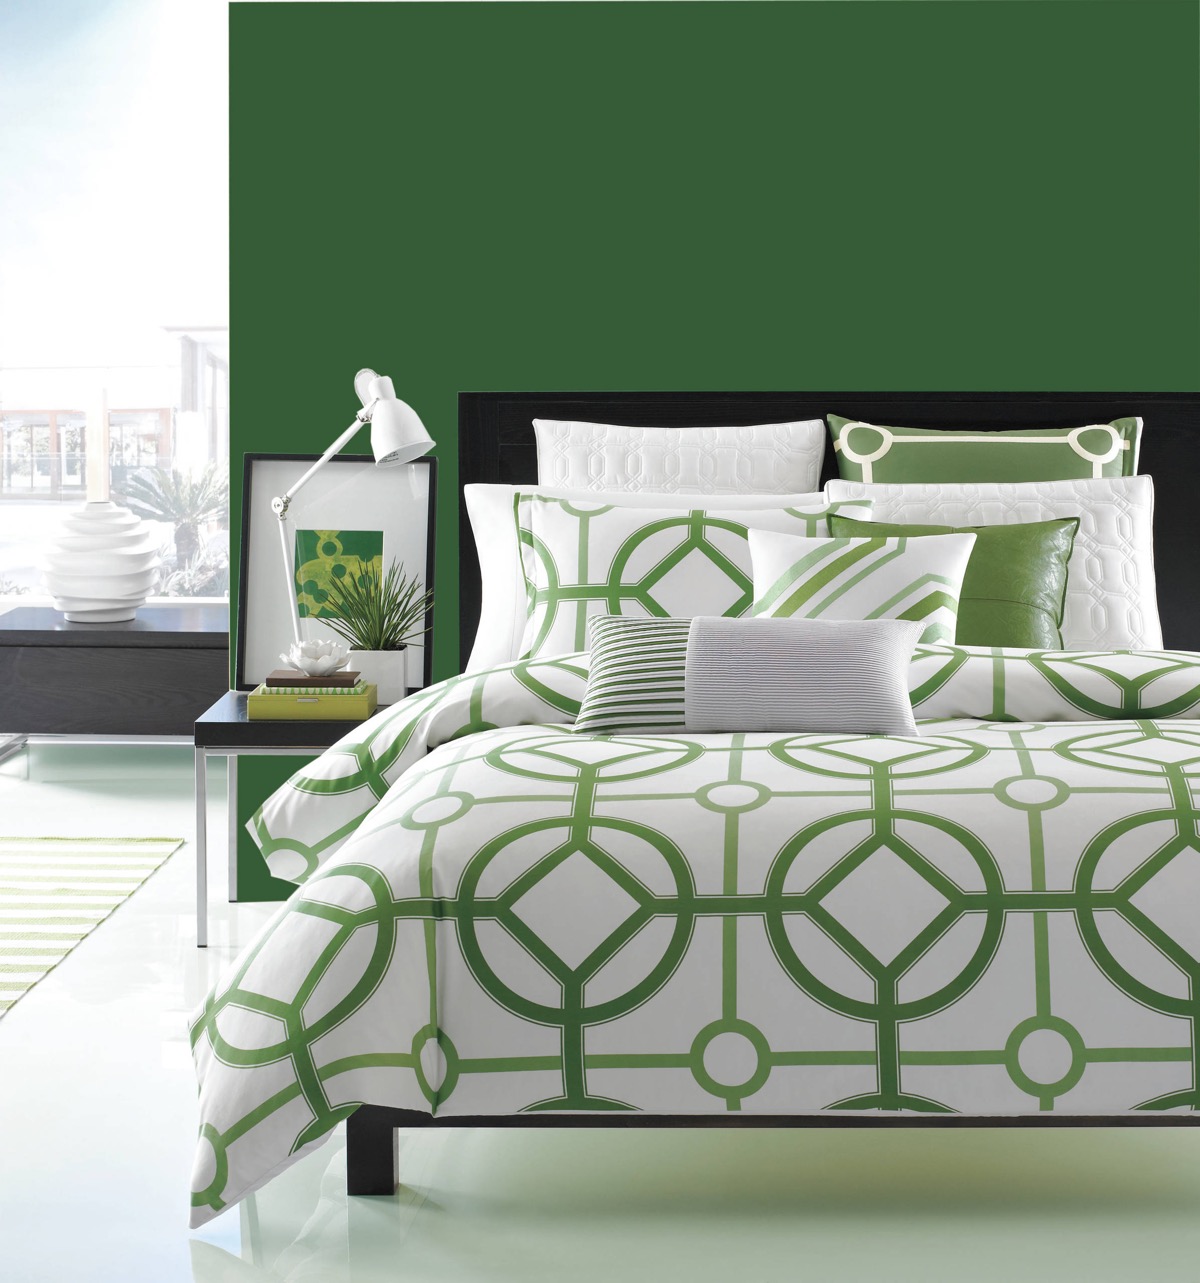 green-bedroom-walls-600x642.jpg